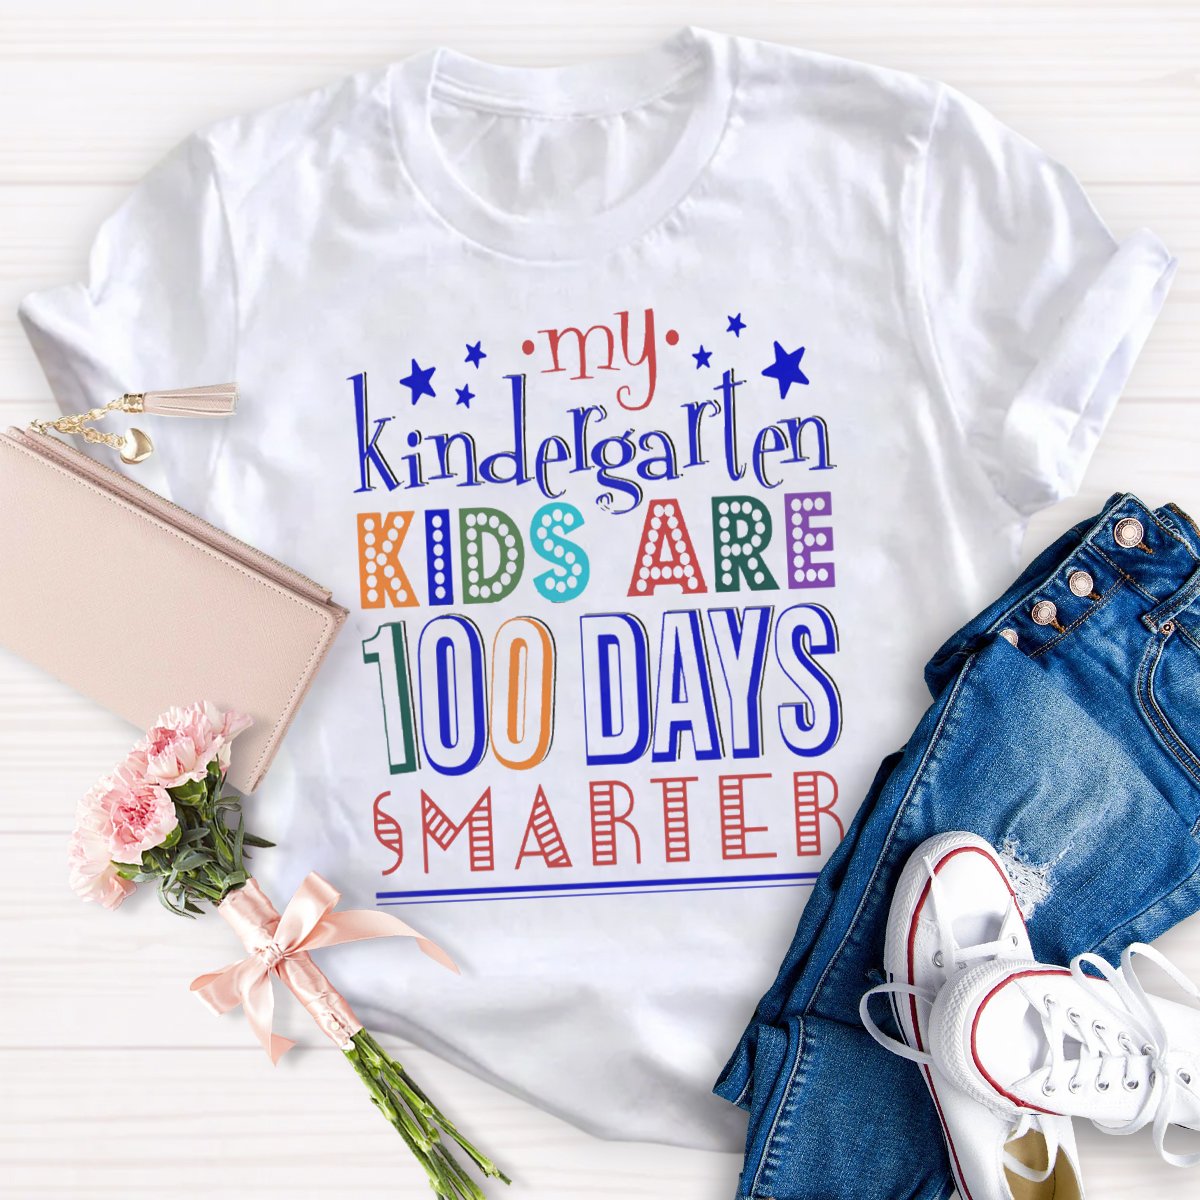 My Kindergarden Kids Are 100 Days Smarter Teacher Shirt